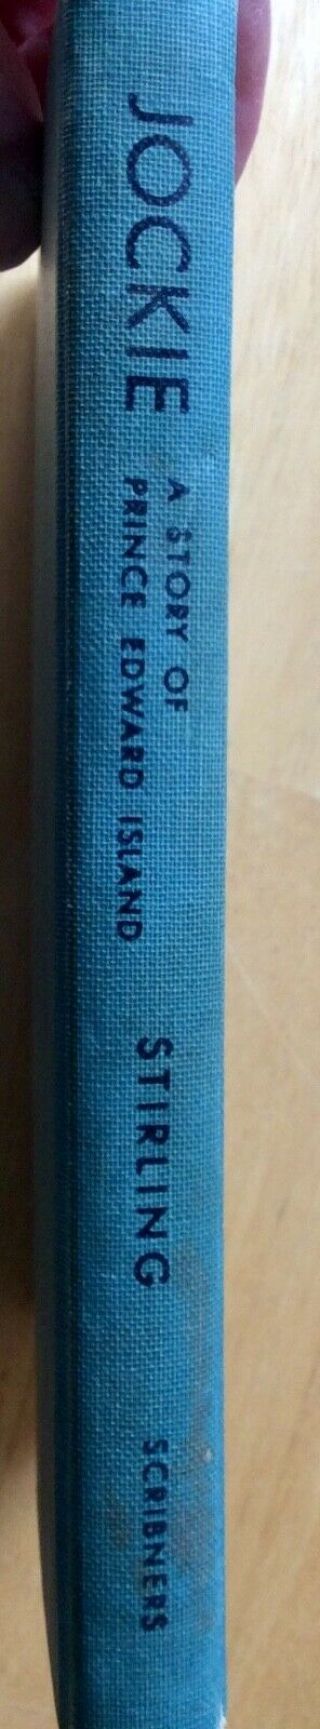 JOCKIE: A Story of Prince Edward Island,  by Lilla Stirling 1951 Hardcover,  VHTF 2